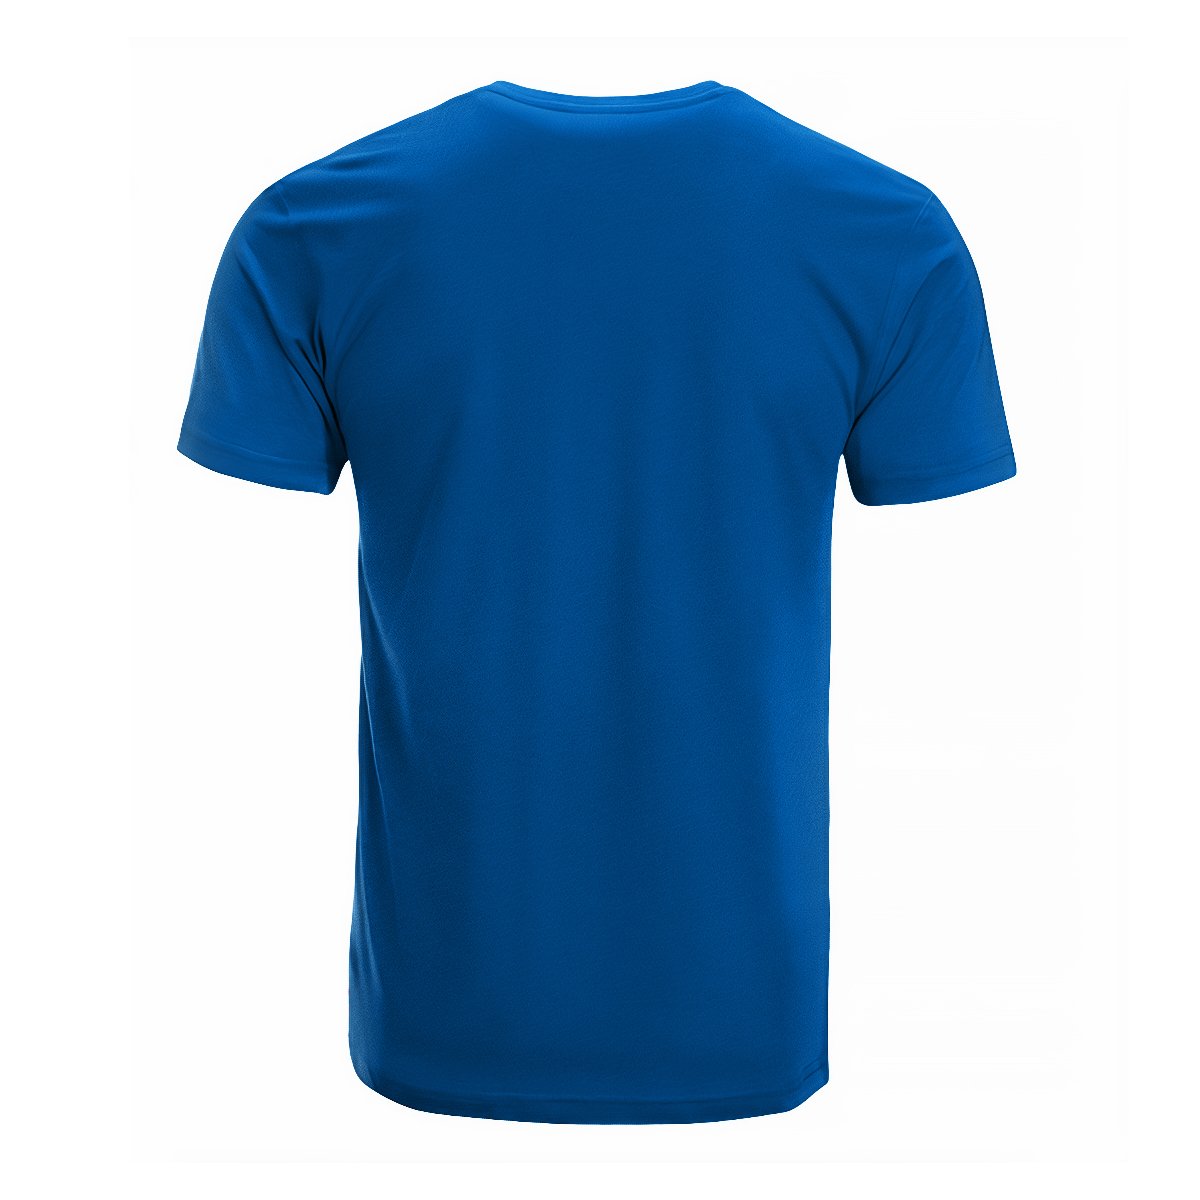 MacKintosh Tartan Crest T-shirt - I'm not yelling style